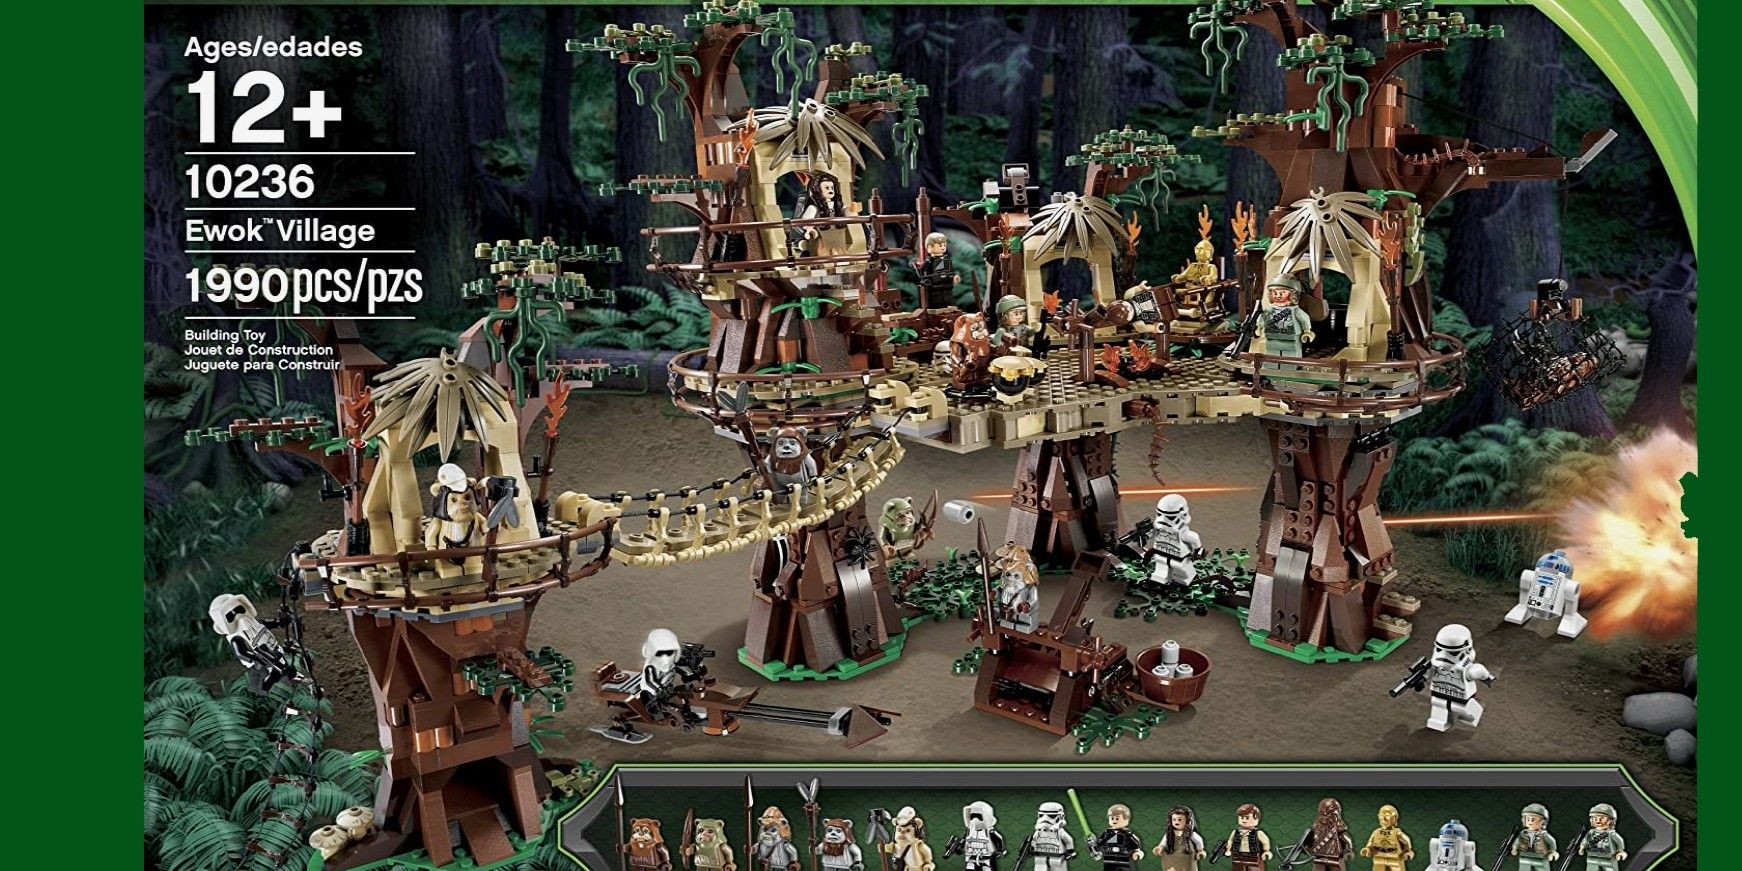 Lego Ewok Village box, lots of treehouses, han and leia and luke, threepio